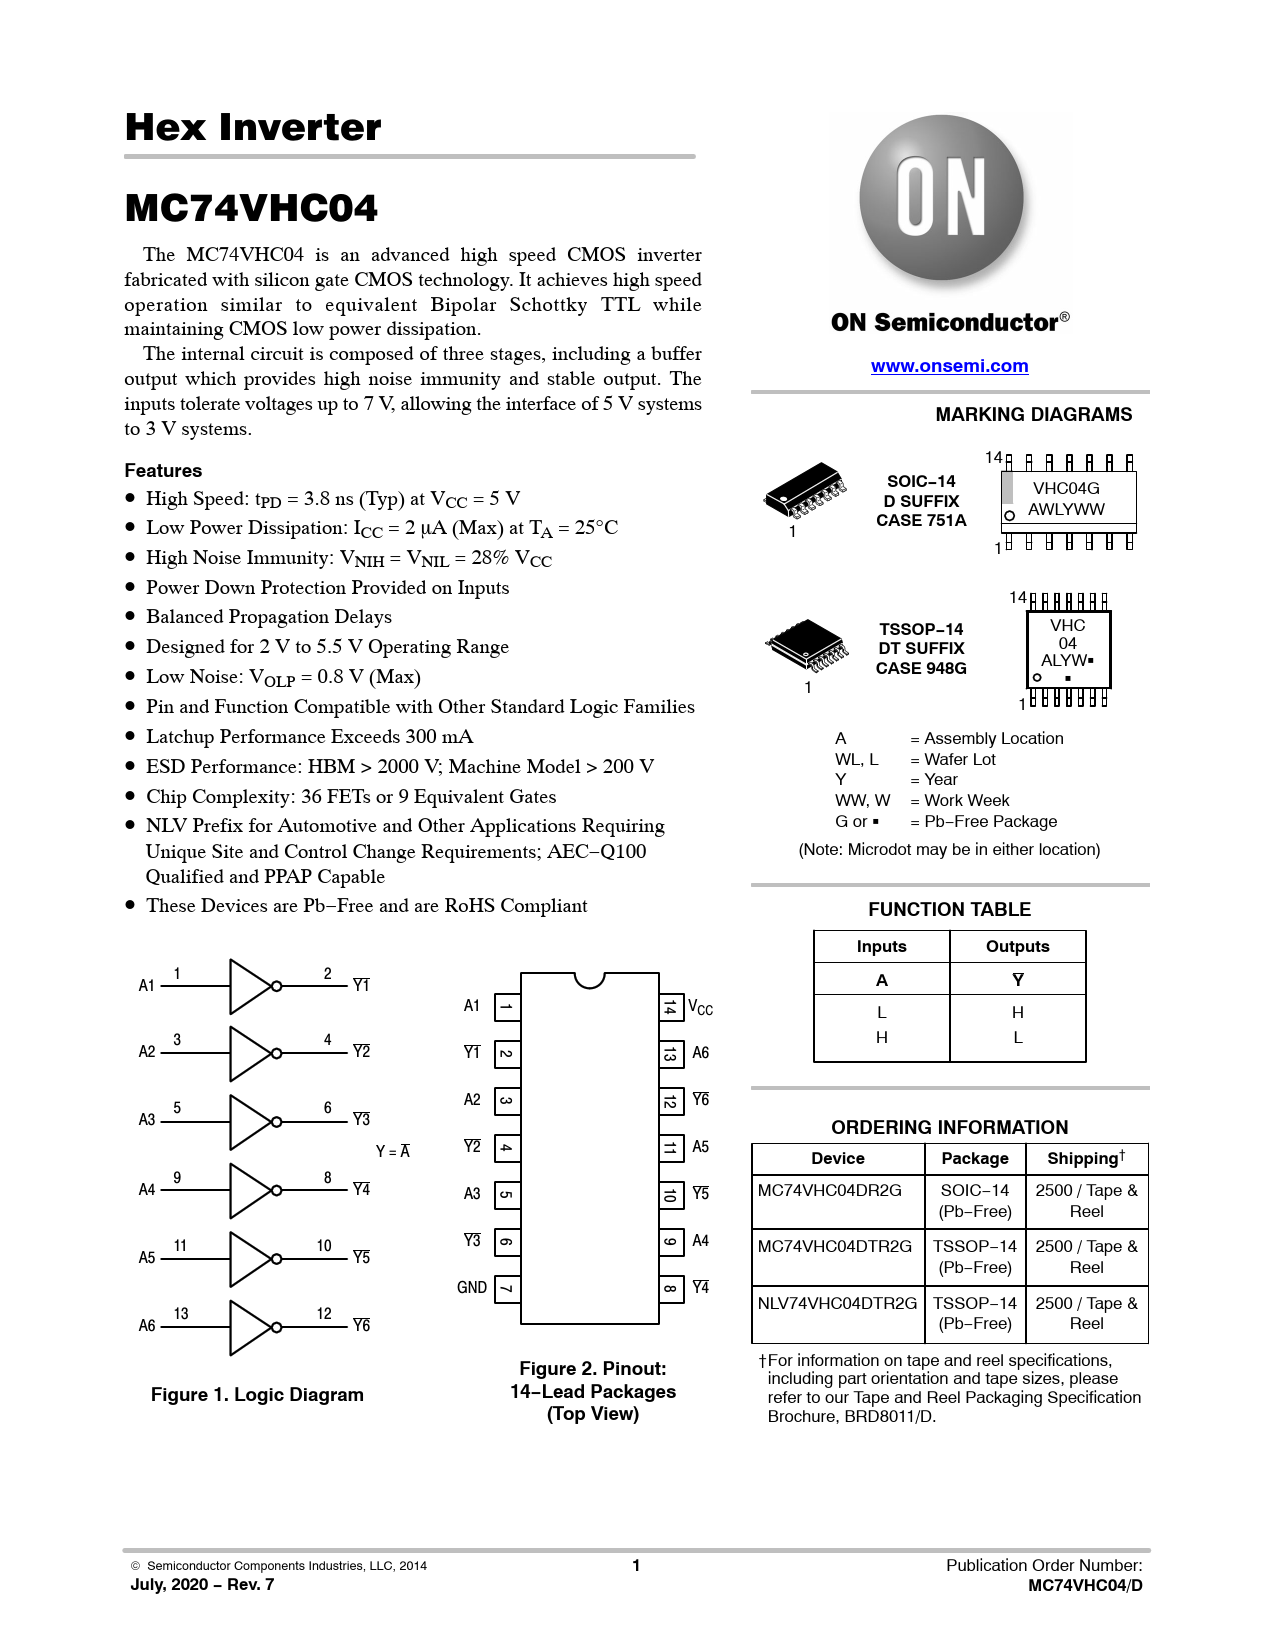 Datasheet MC74VHC04 ON Semiconductor, Revision: 7